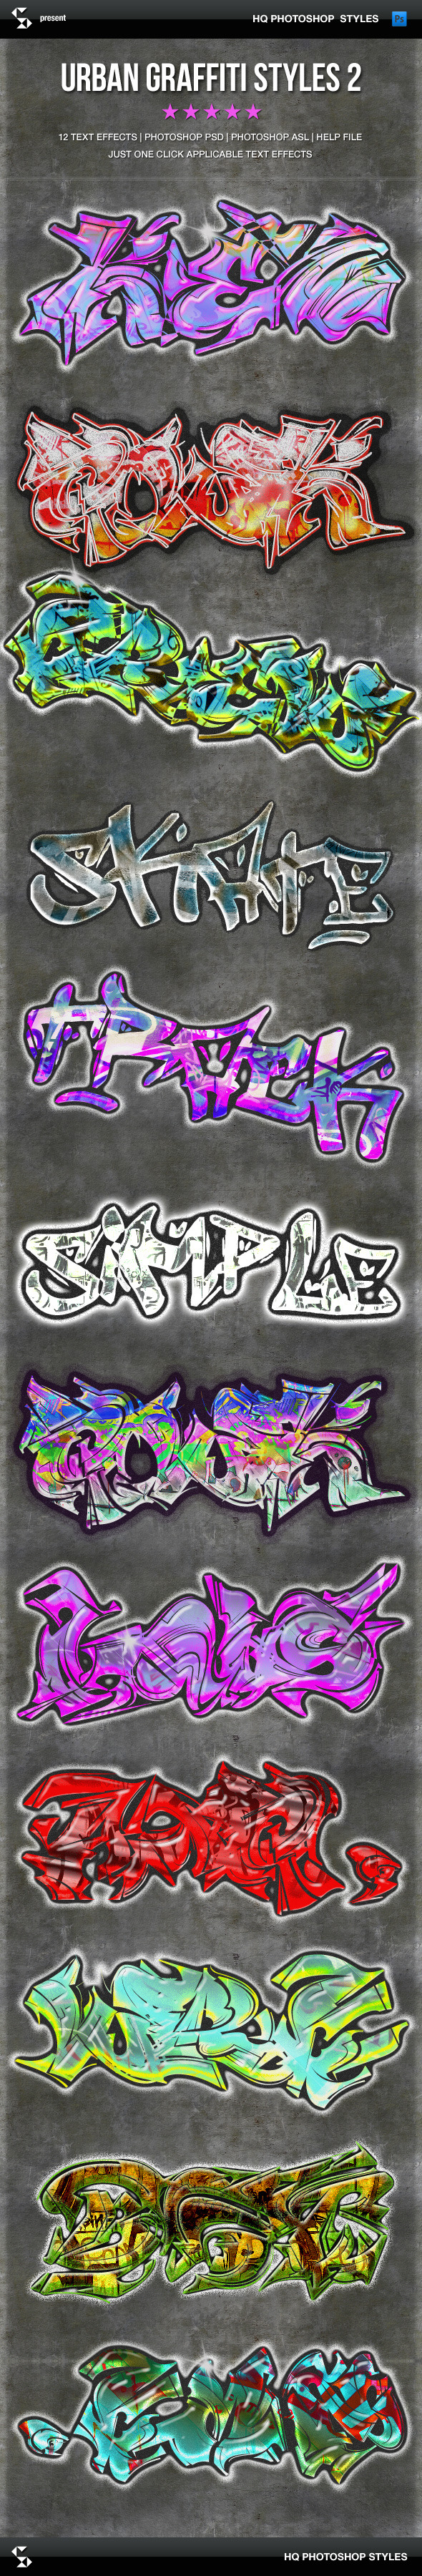 Urban Graffiti Text Effects 2 - Text Effects Styles